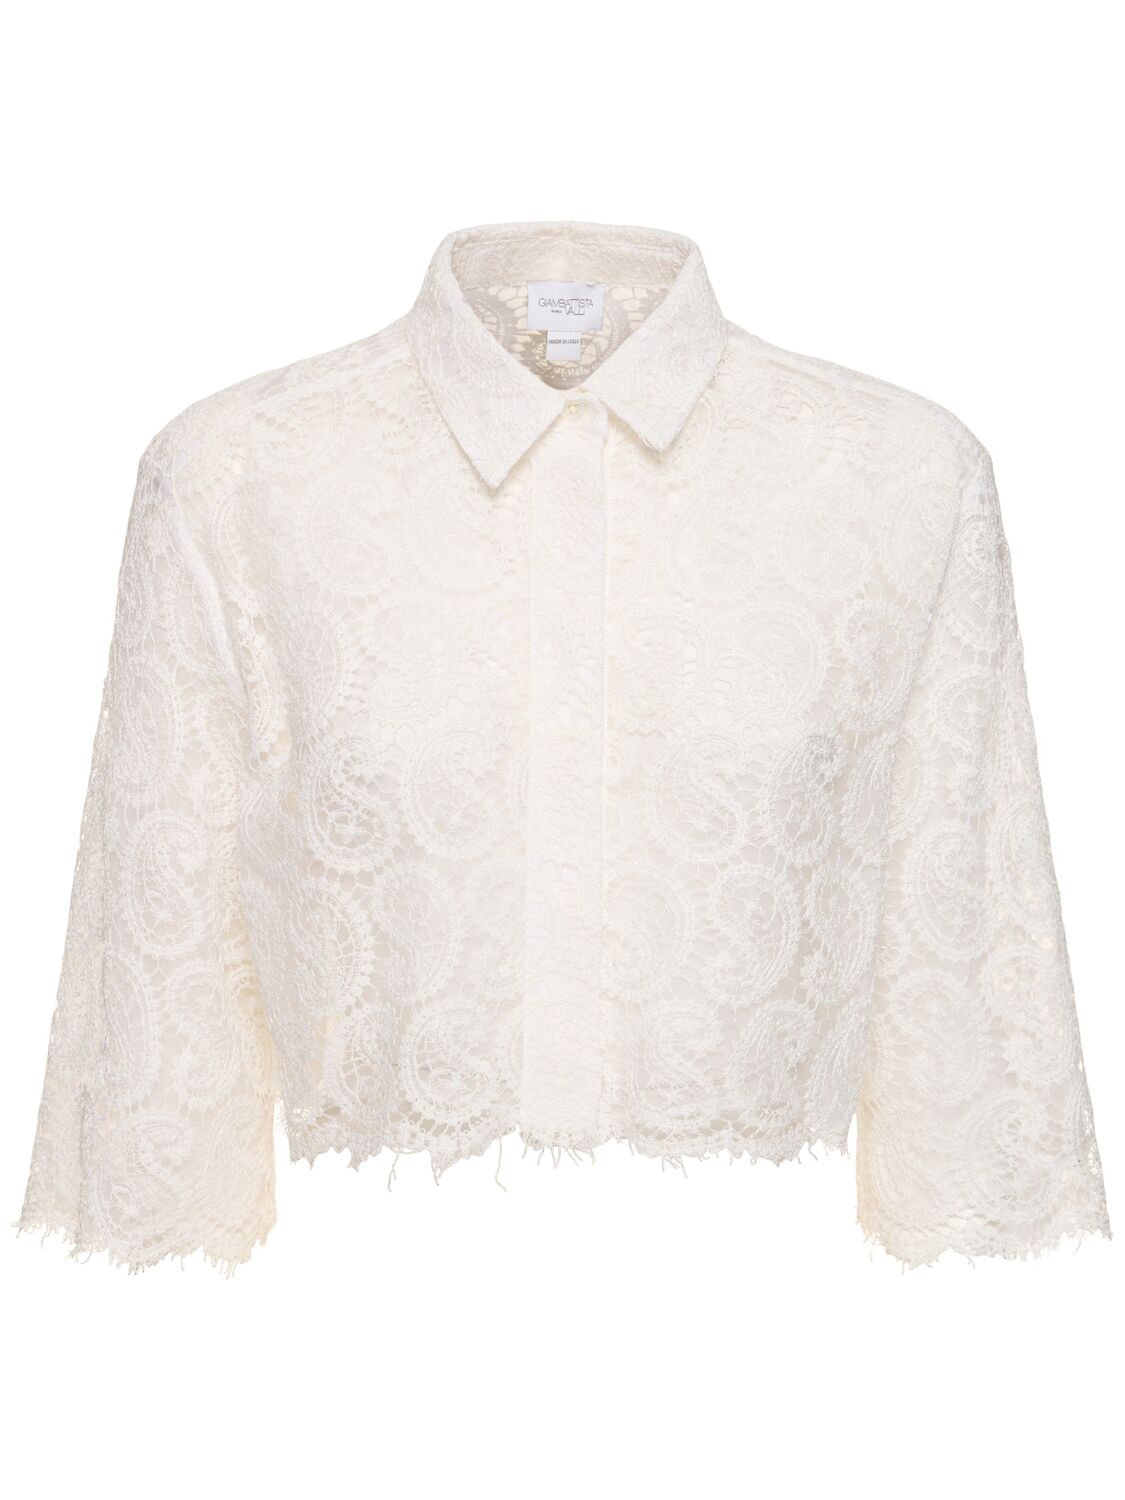 Giambattista Valli Paisley Lace Shirt In Ivory